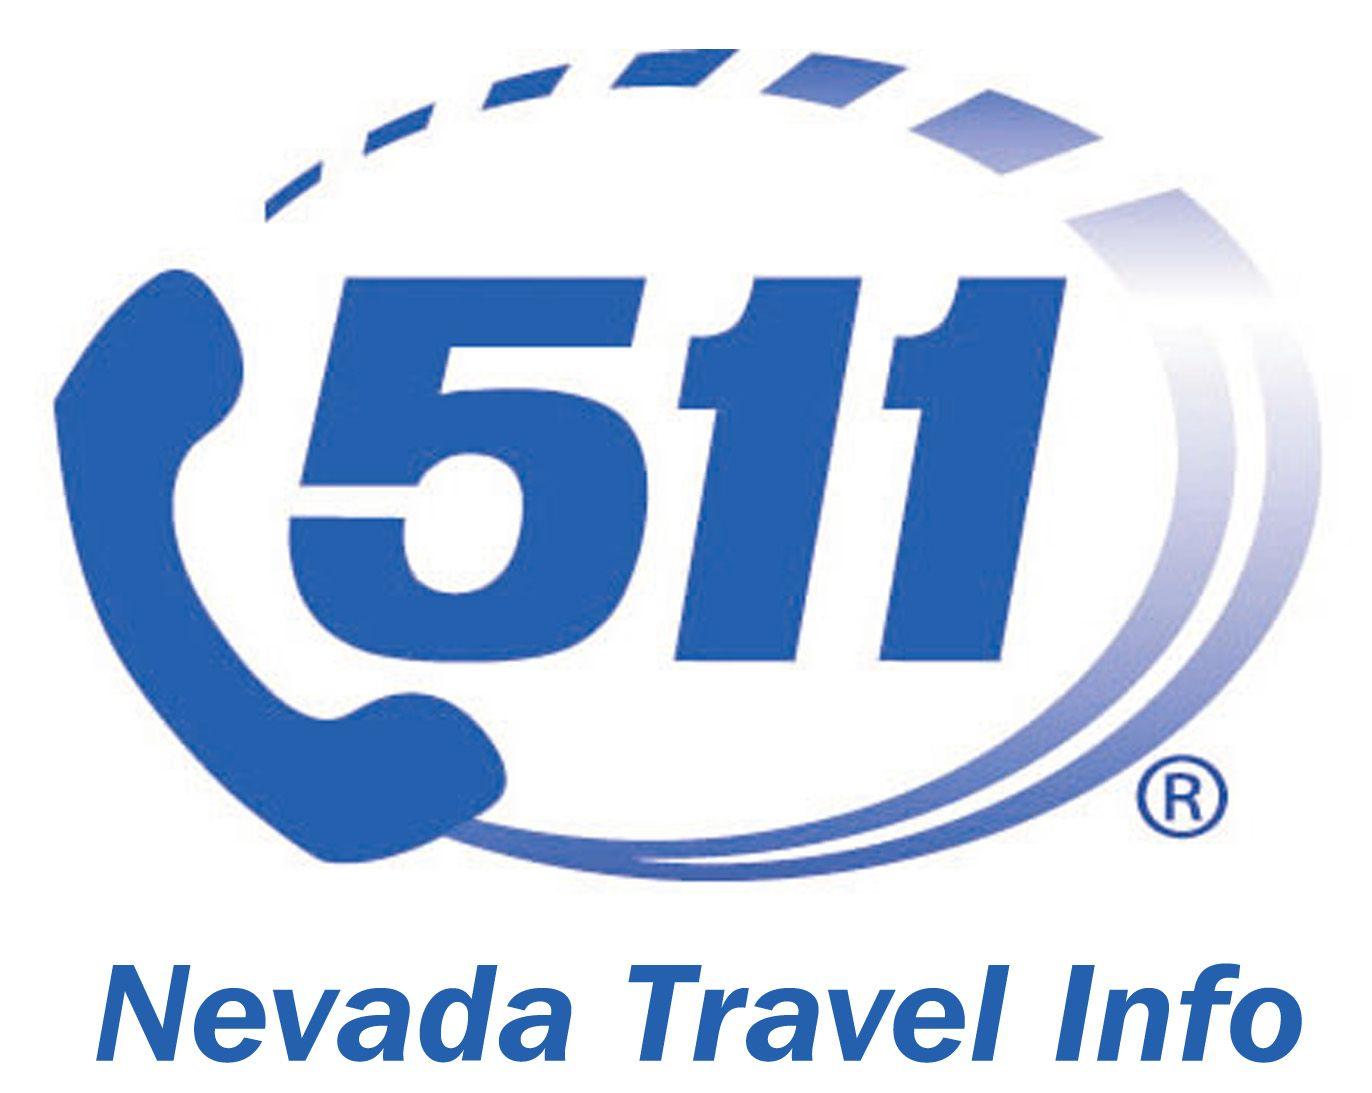 Nevada Dot Logo - Travel Info. Nevada Department of Transportation